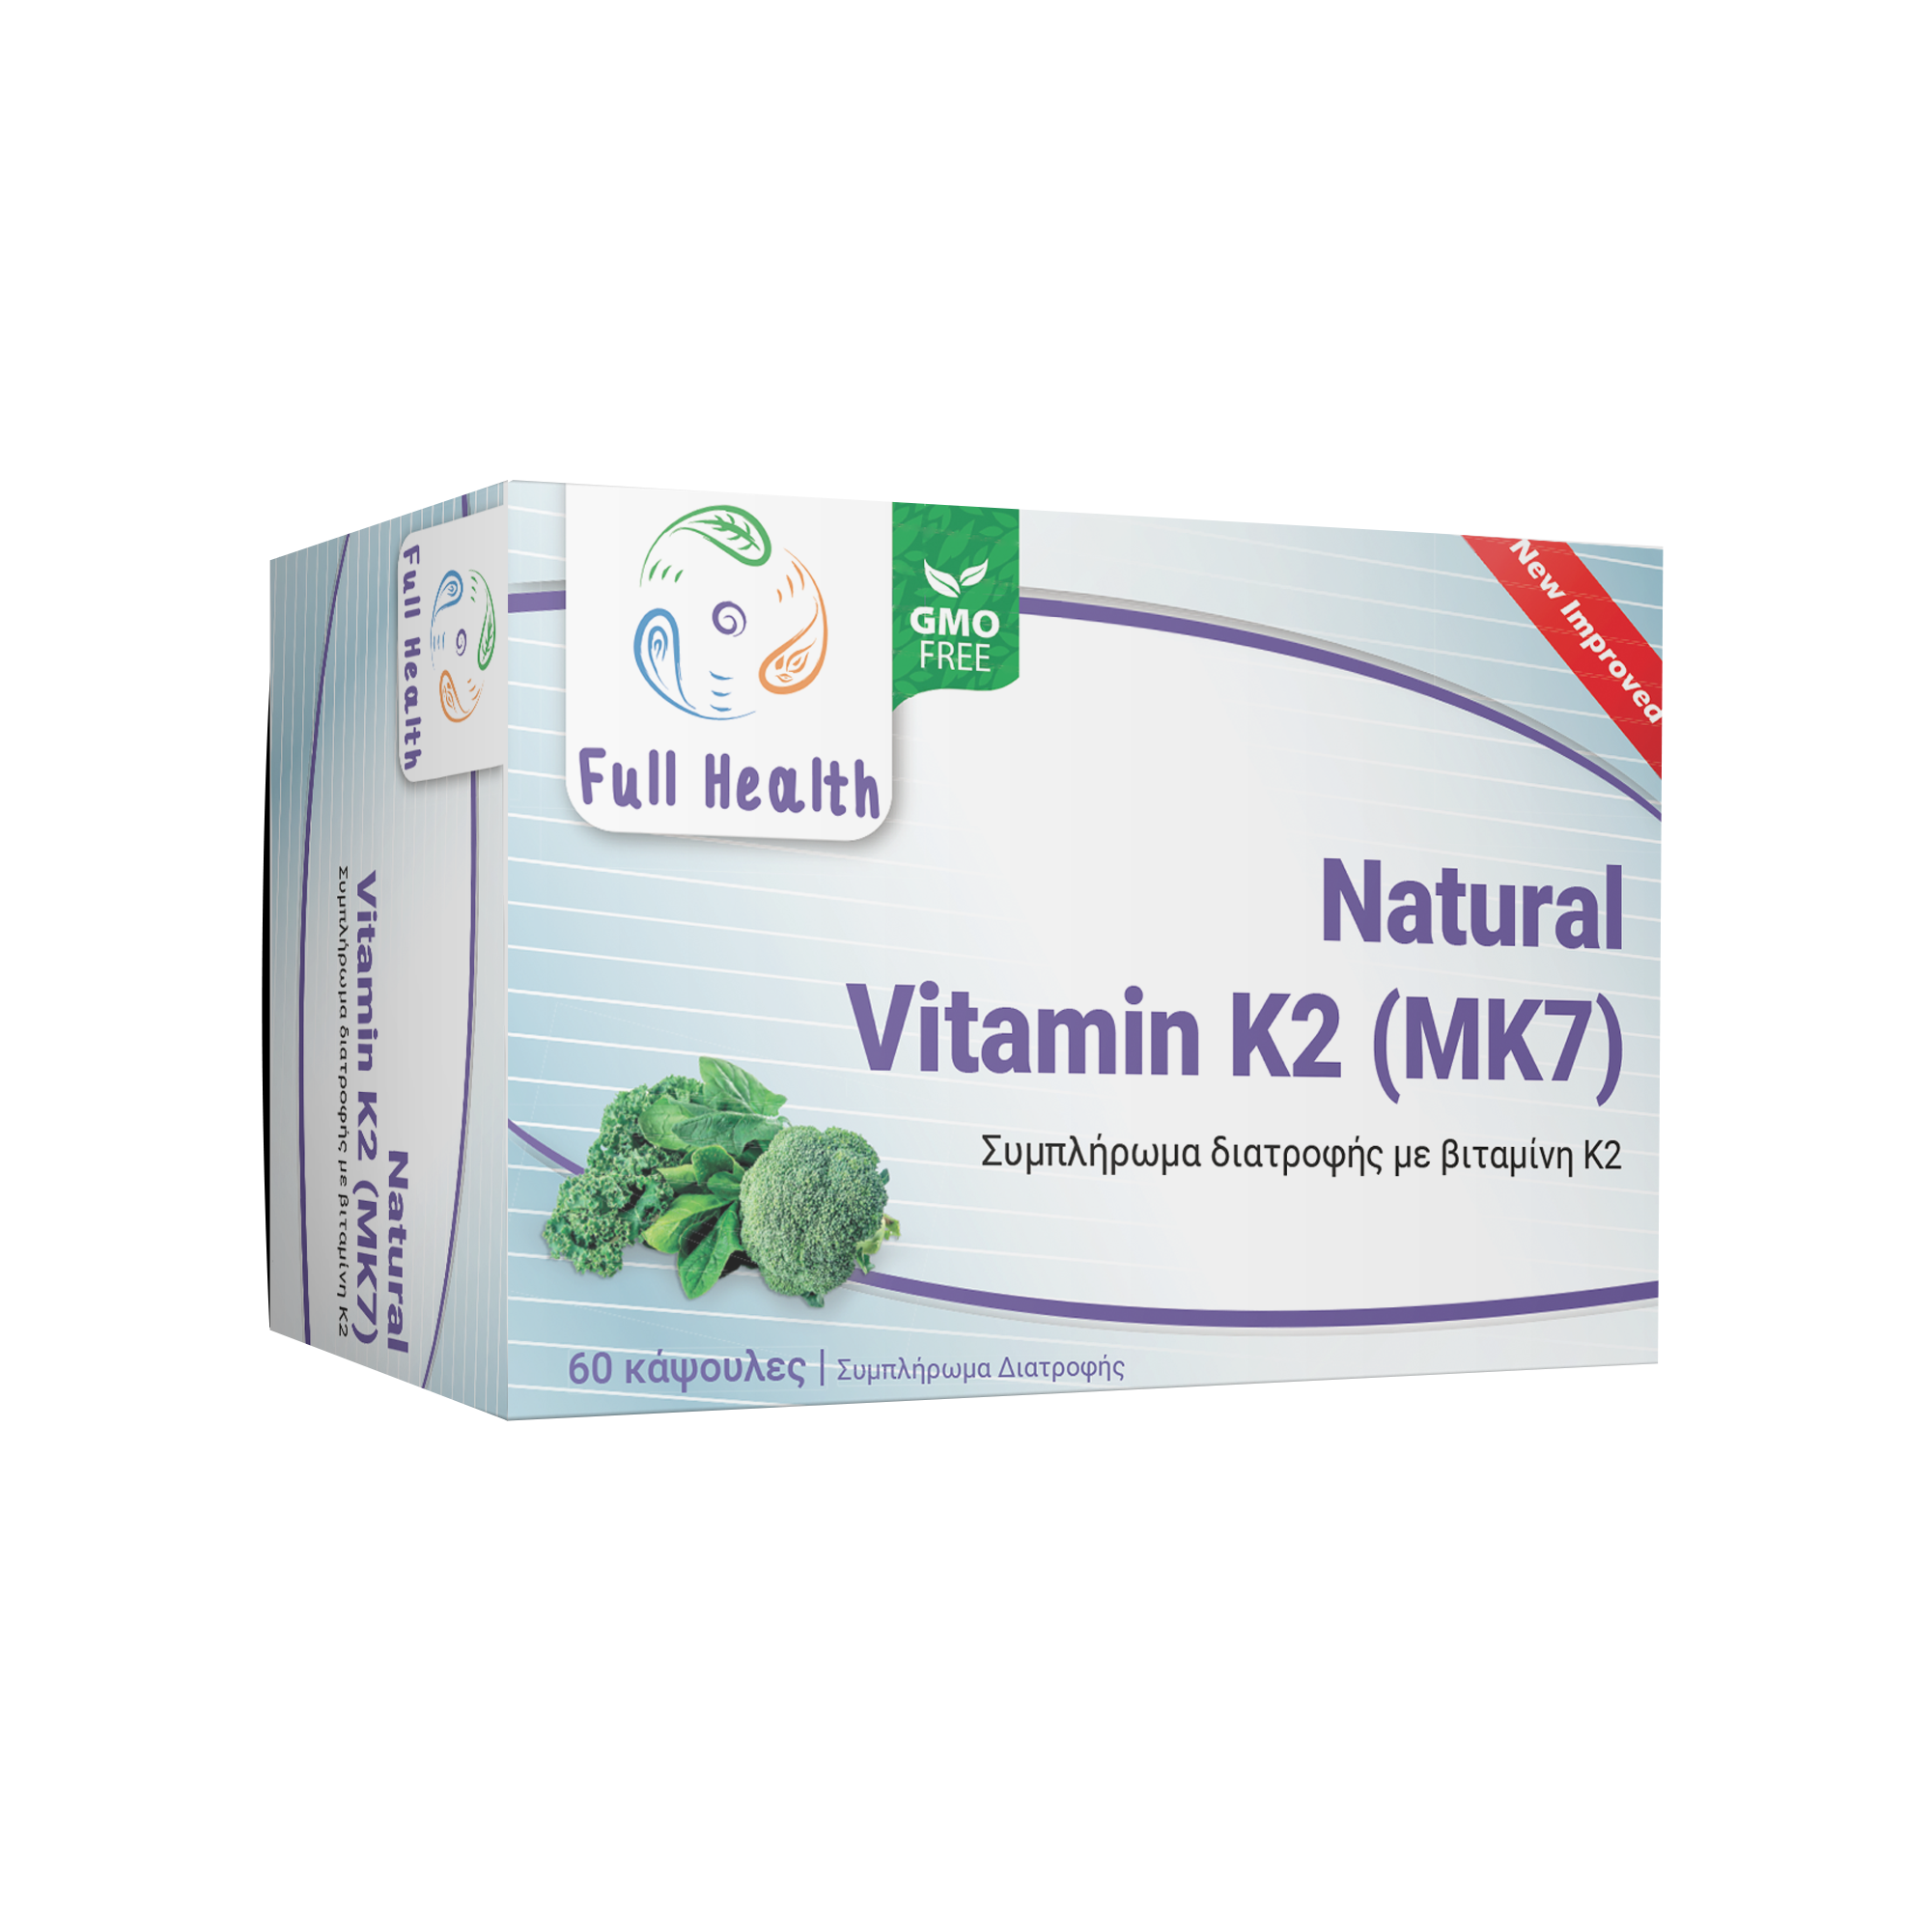 FULL HEALTH NATURAL VITAMIN K2 (MK7) 60 Caps (Συμπλήρωμα διατροφής με βιταμίνη Κ2 που συμβάλλει στην φυσιολογική κατάσταση των οστών)